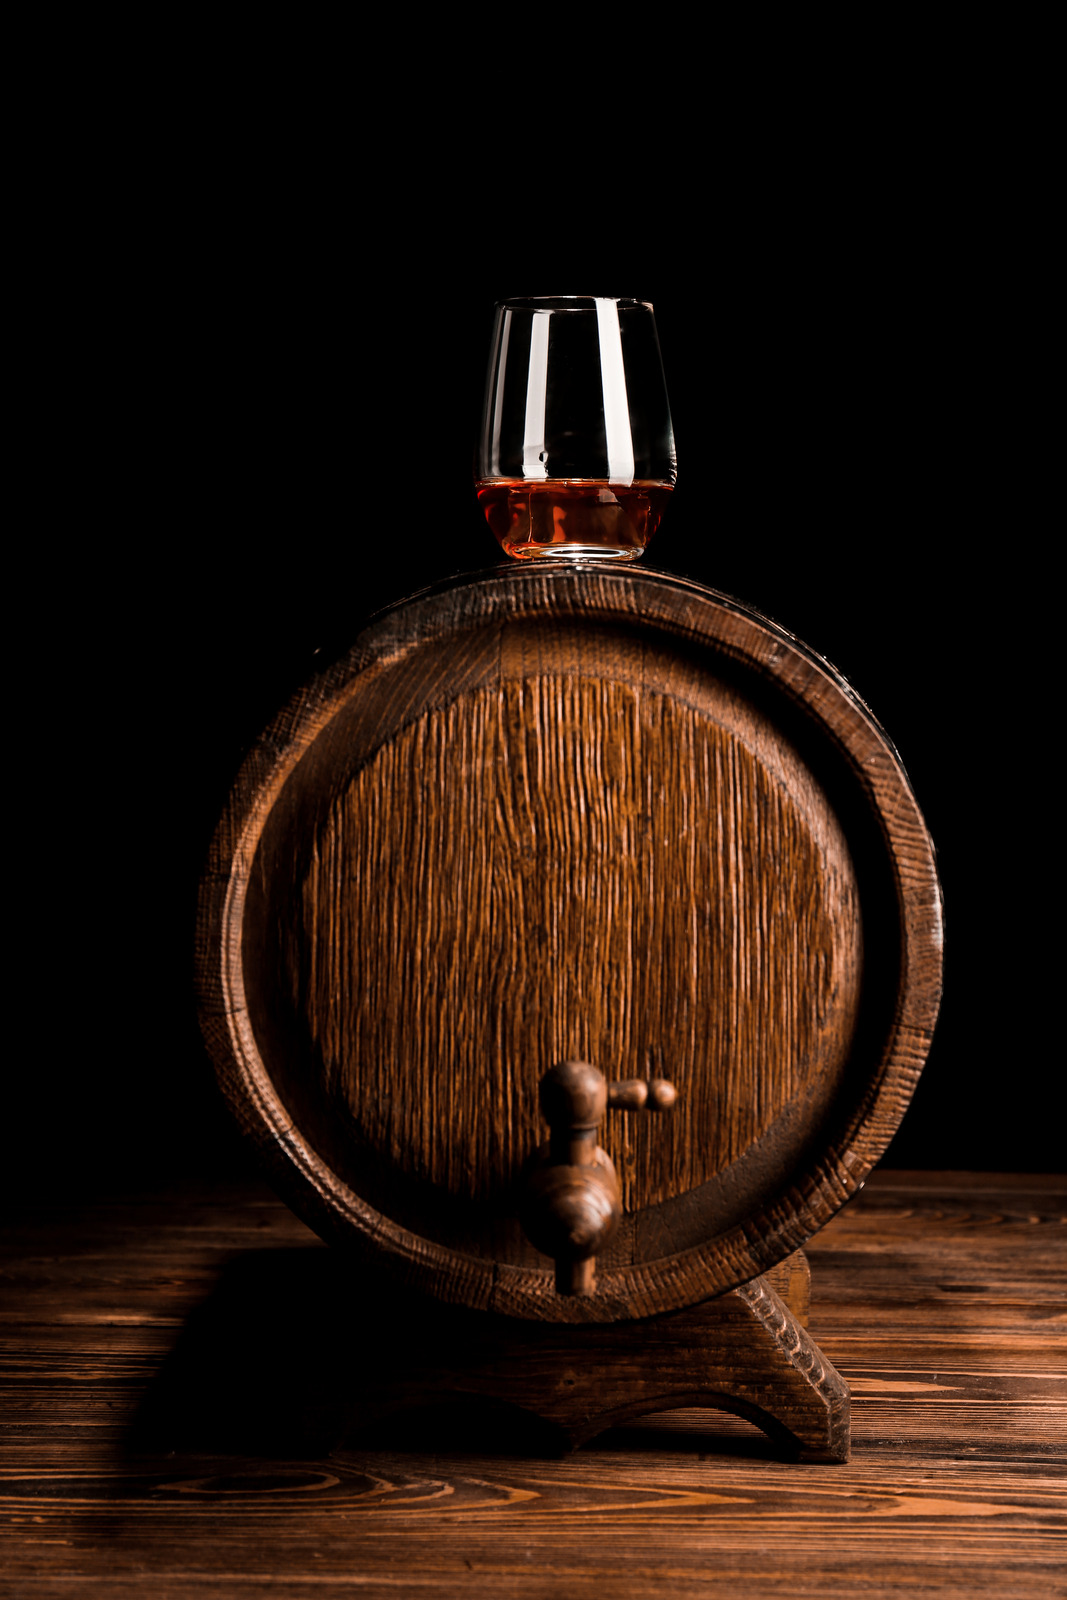 Glass of whiskey on wooden barrel against black background